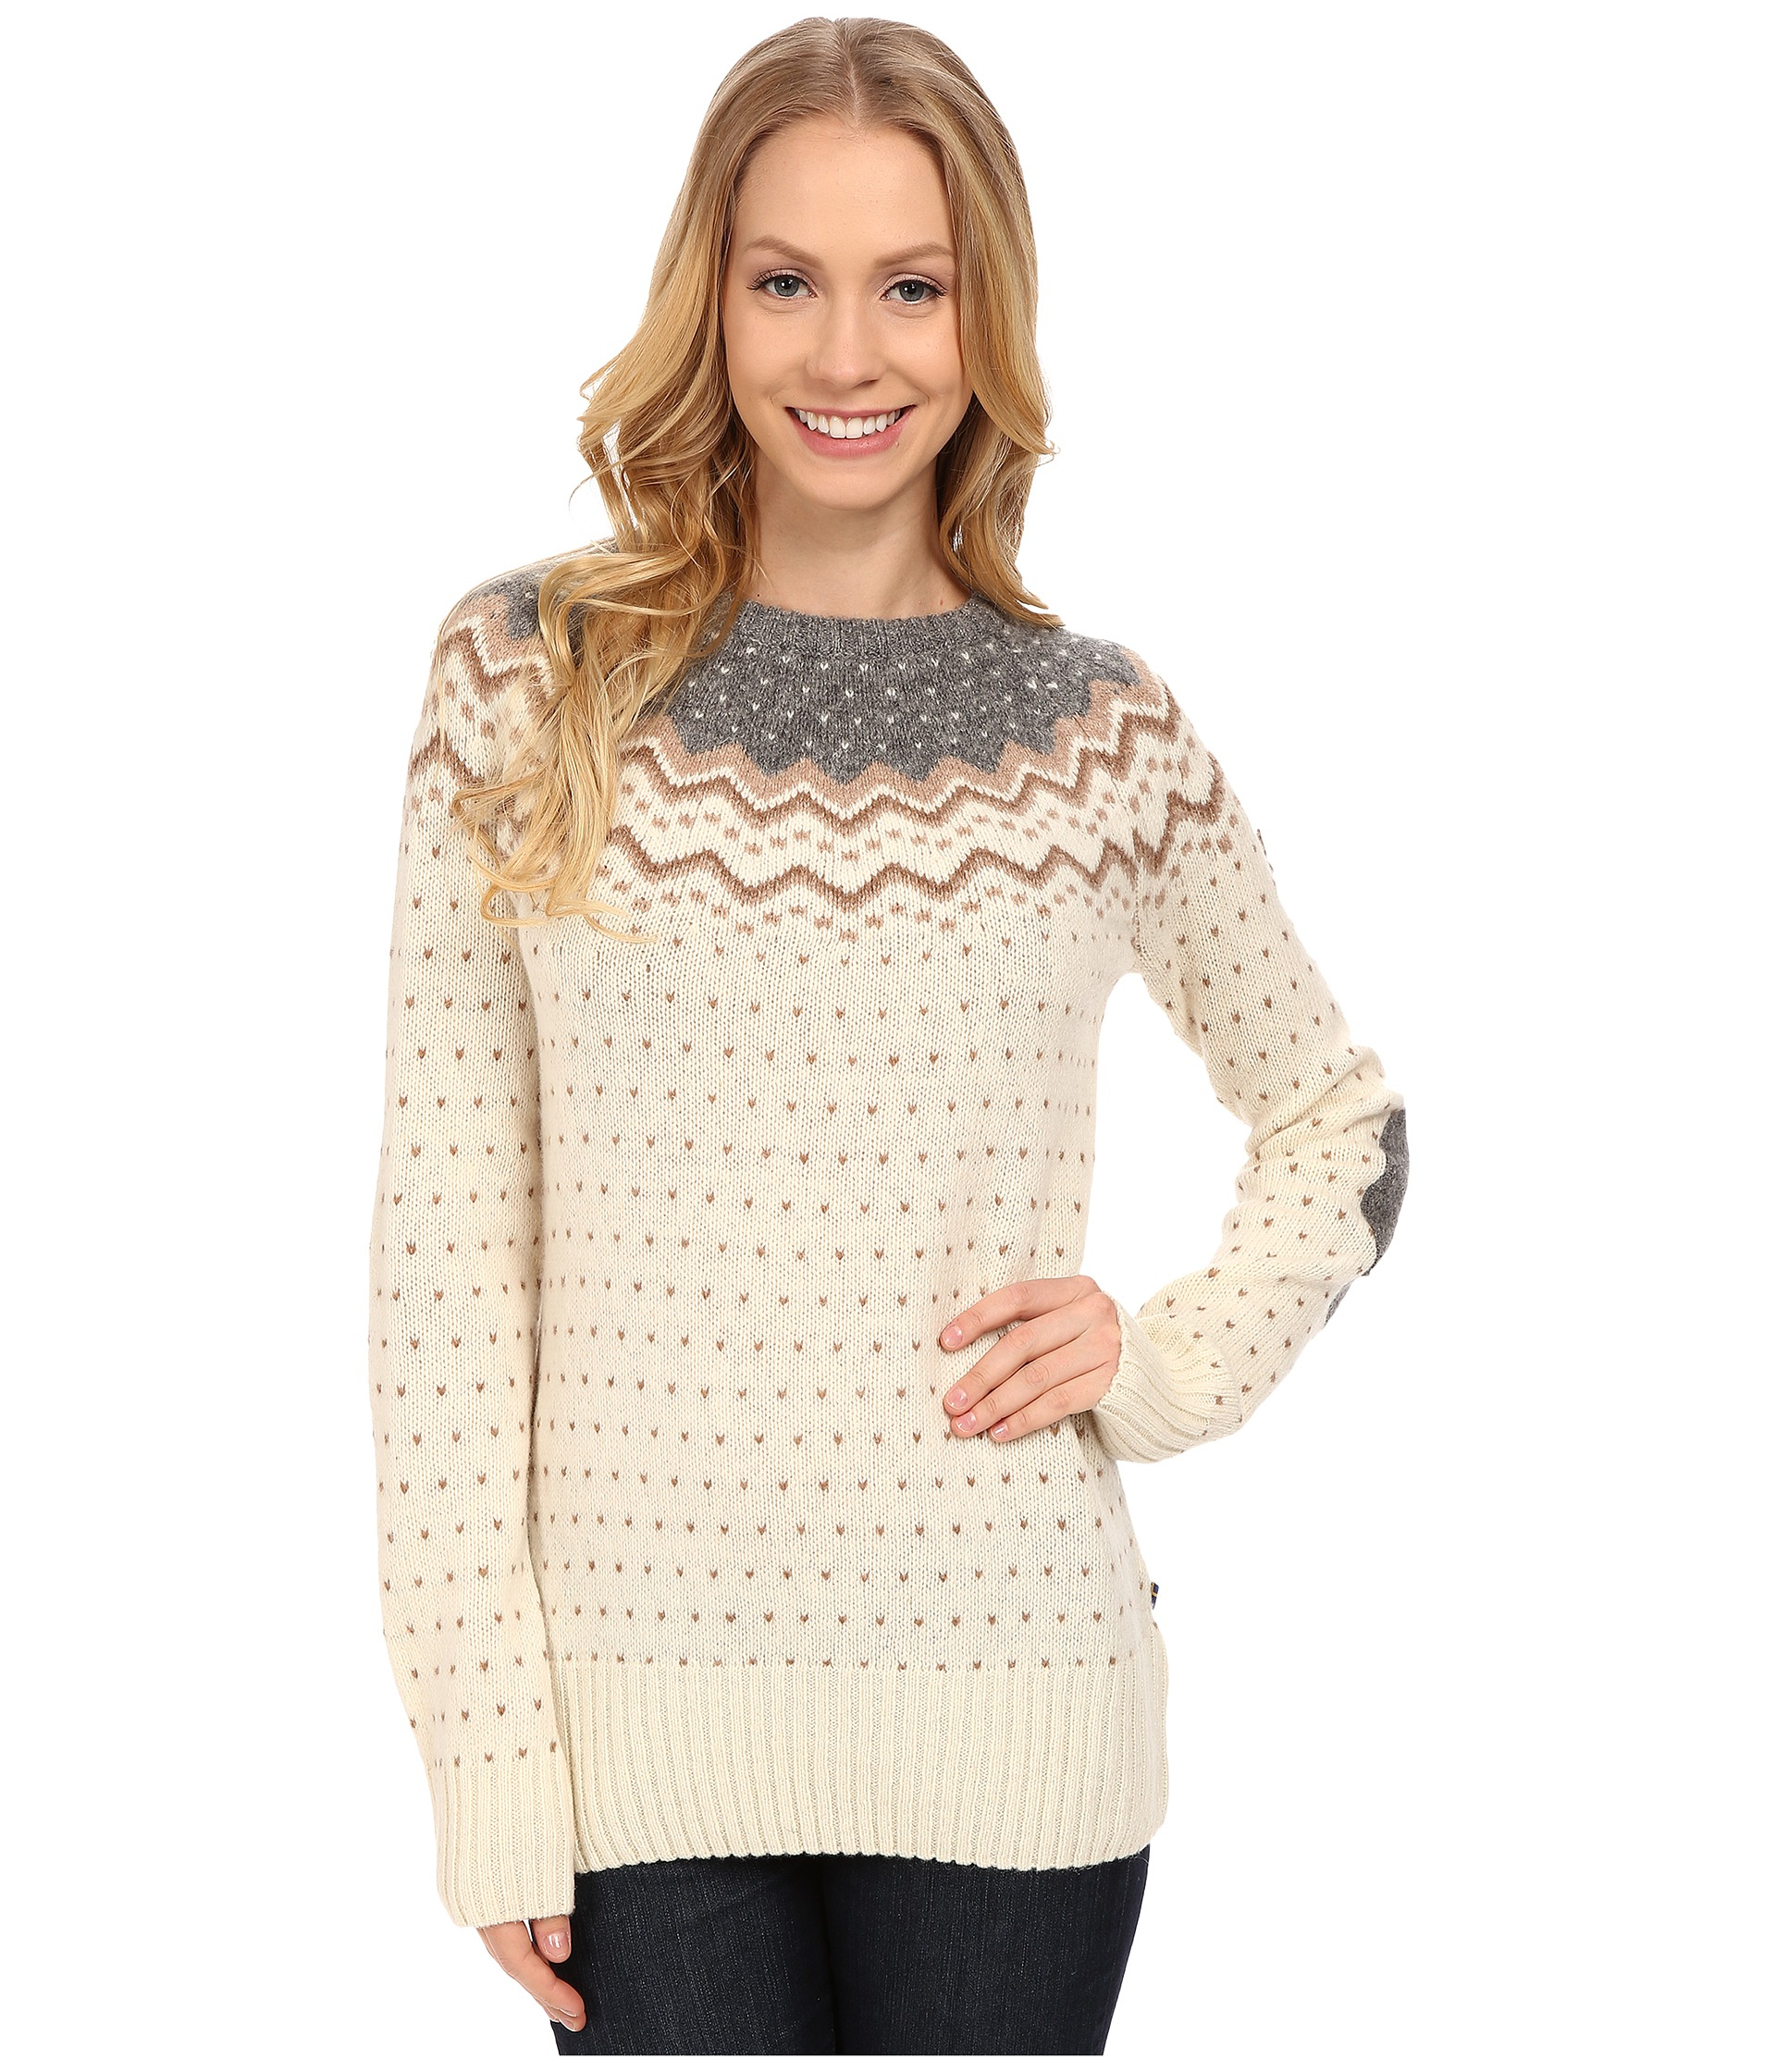 Lyst - Fjallraven Övik Knit Sweater in Brown